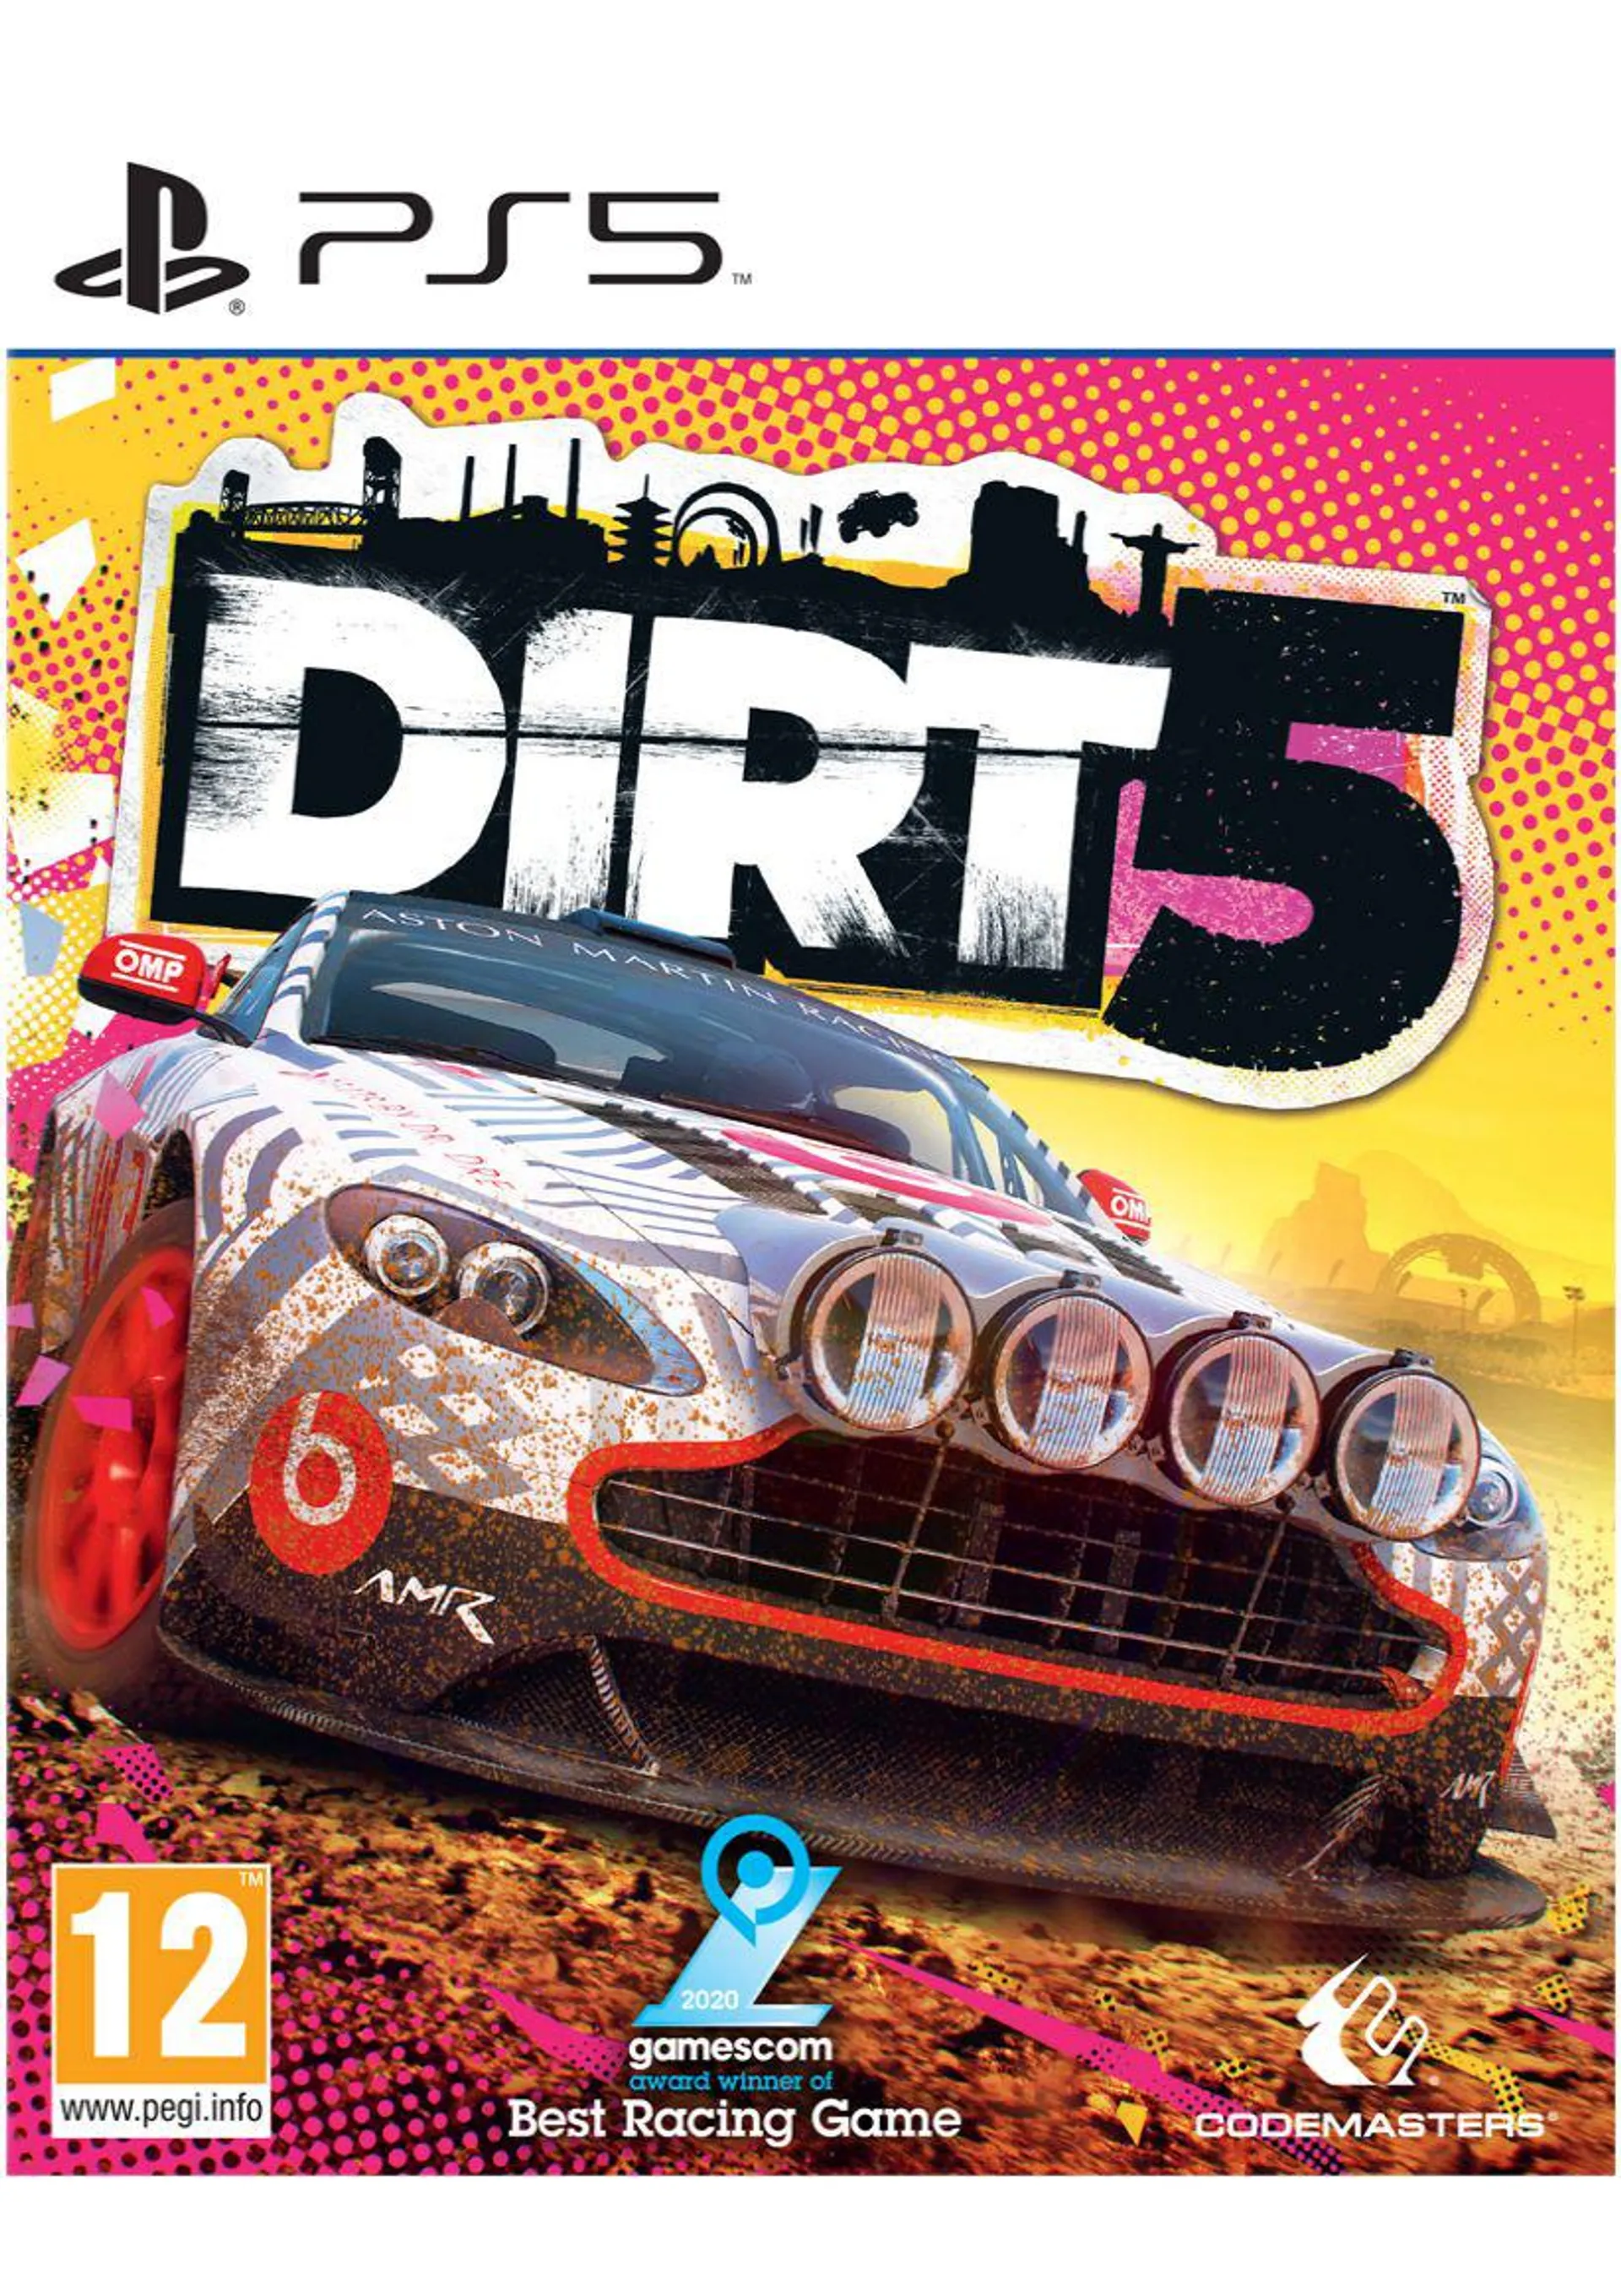 DIRT 5 on PlayStation 5